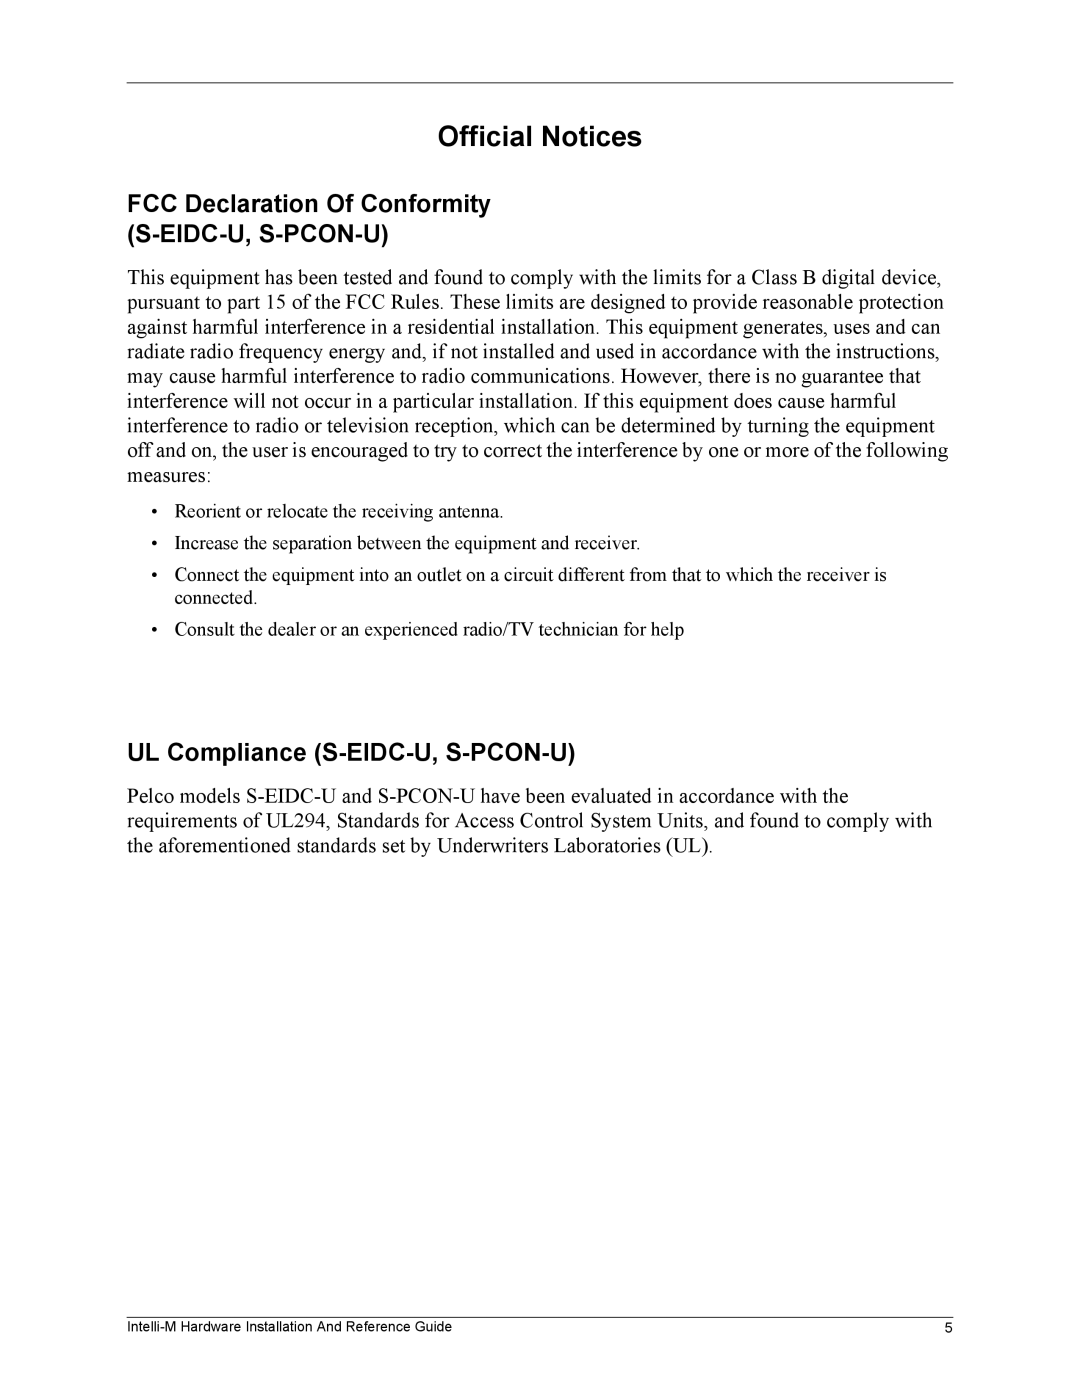 Pelco c3653m-a manual UL Compliance S-EIDC-U, S-PCON-U, Official Notices, FCC Declaration Of Conformity S-EIDC-U, S-PCON-U 